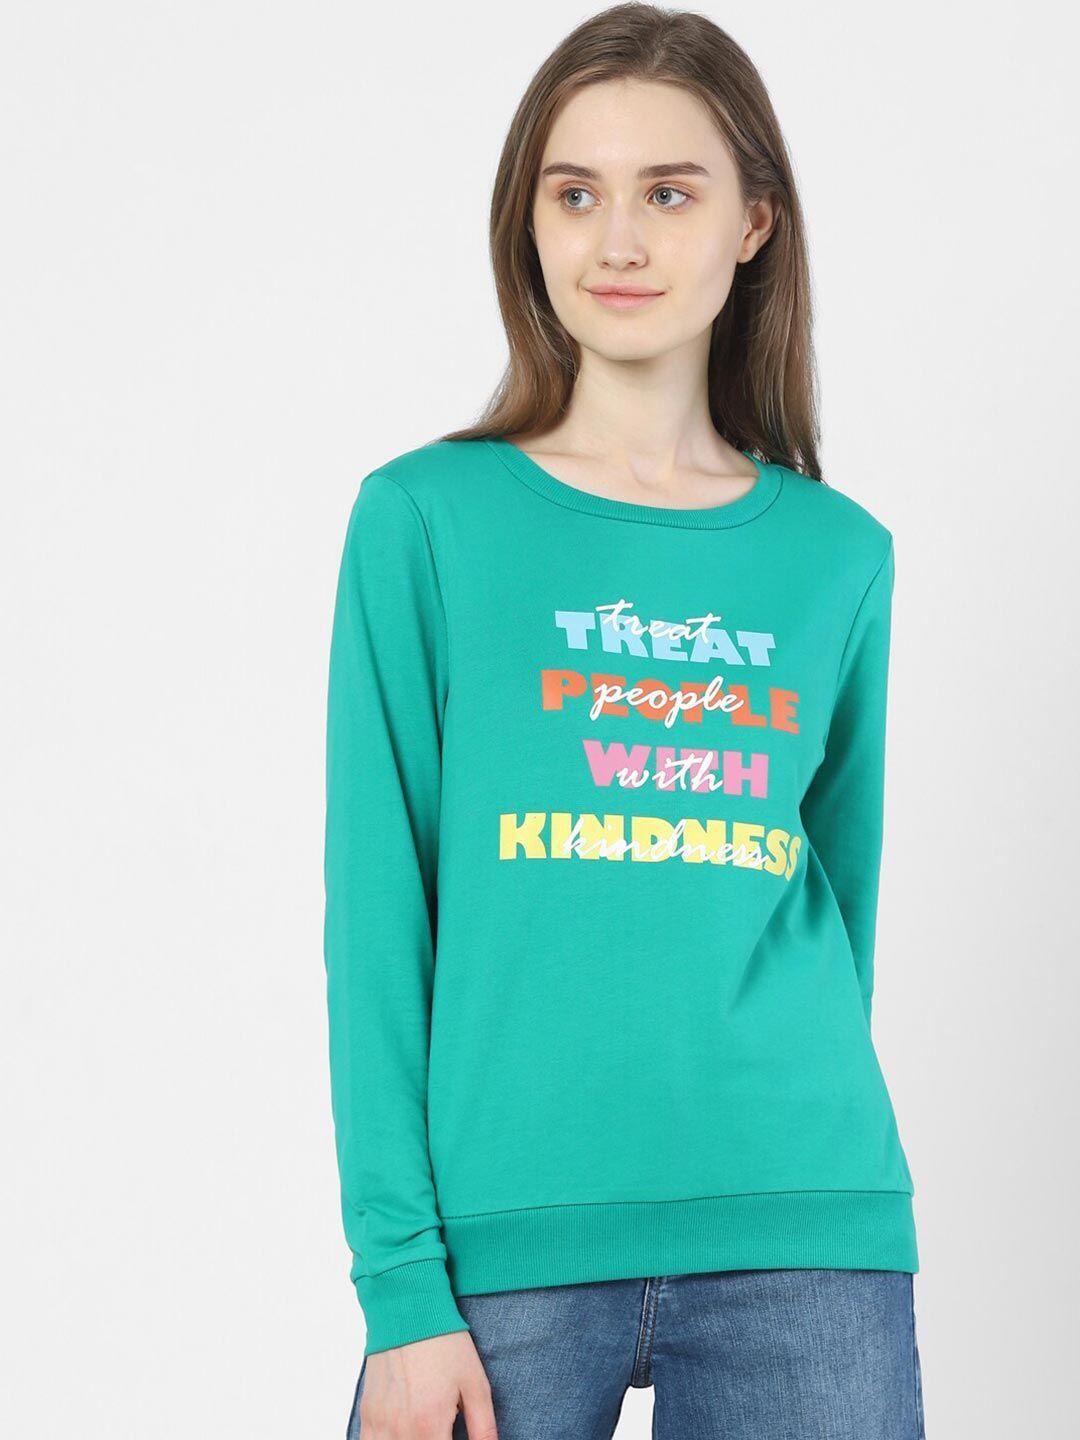 vero moda women green printed sweatshirt